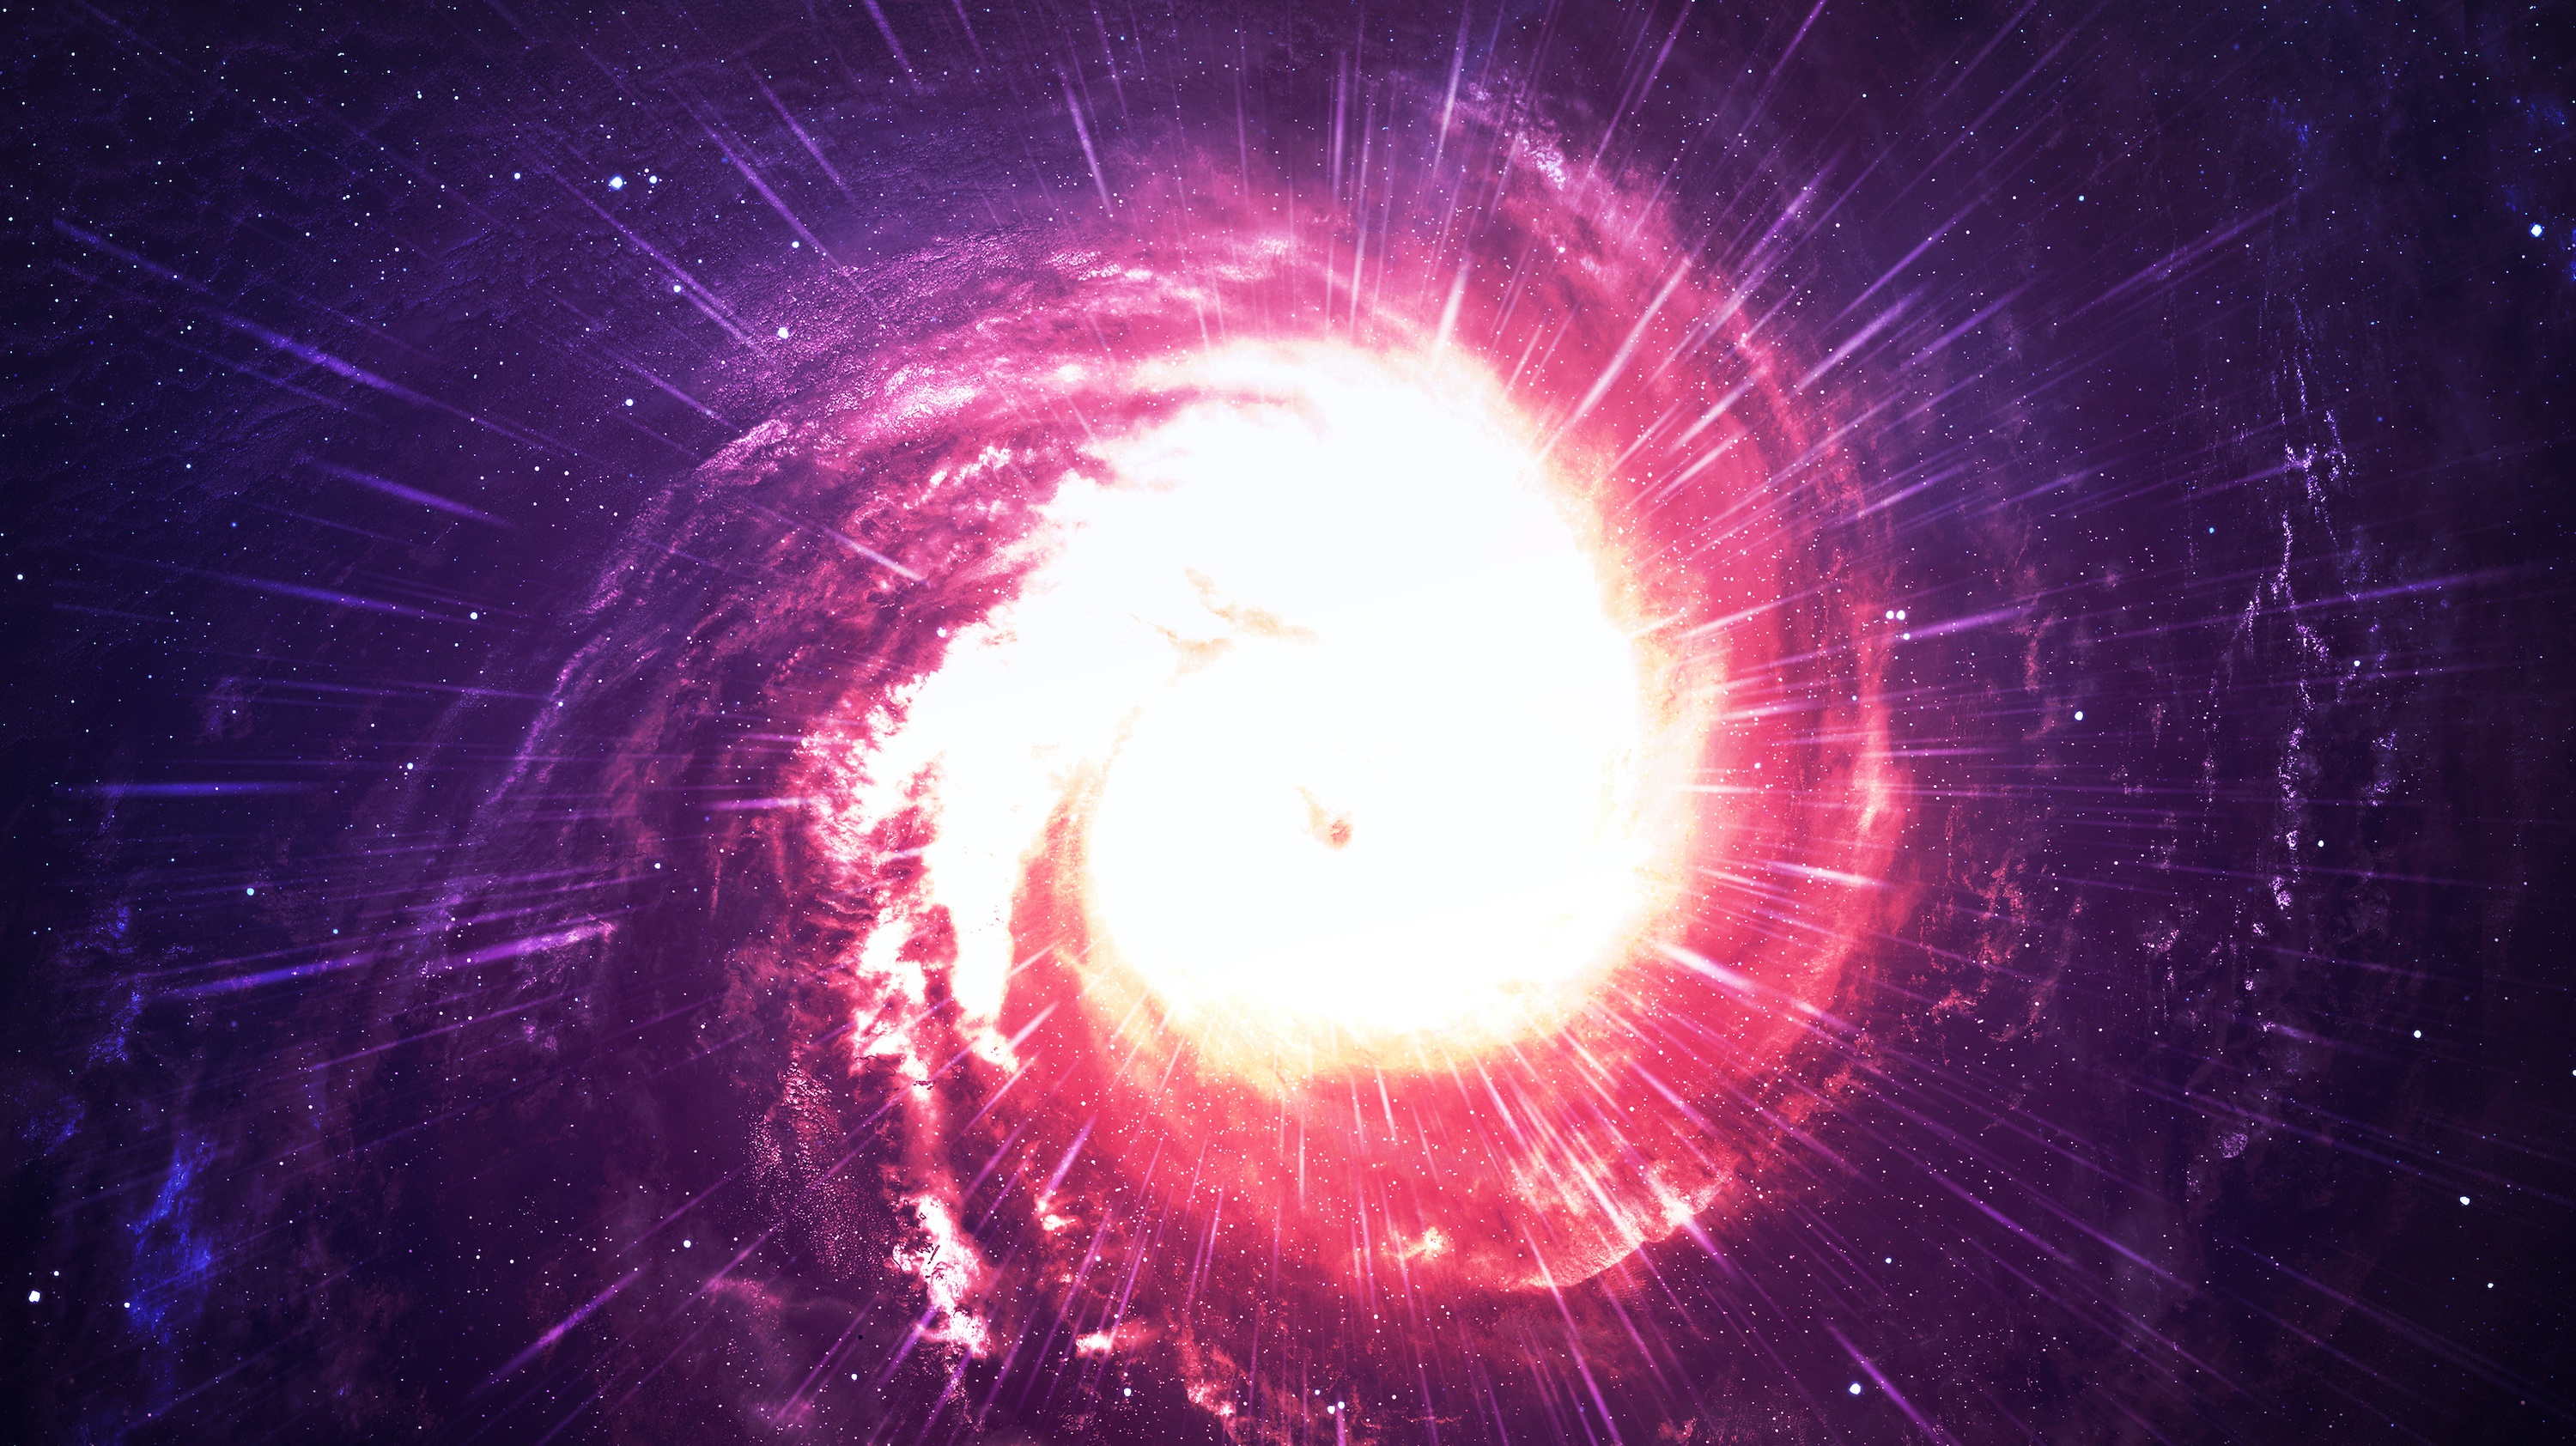 Une vue d'artiste d'une galaxie spirale. © Vadimsadovski, Adobe Stock